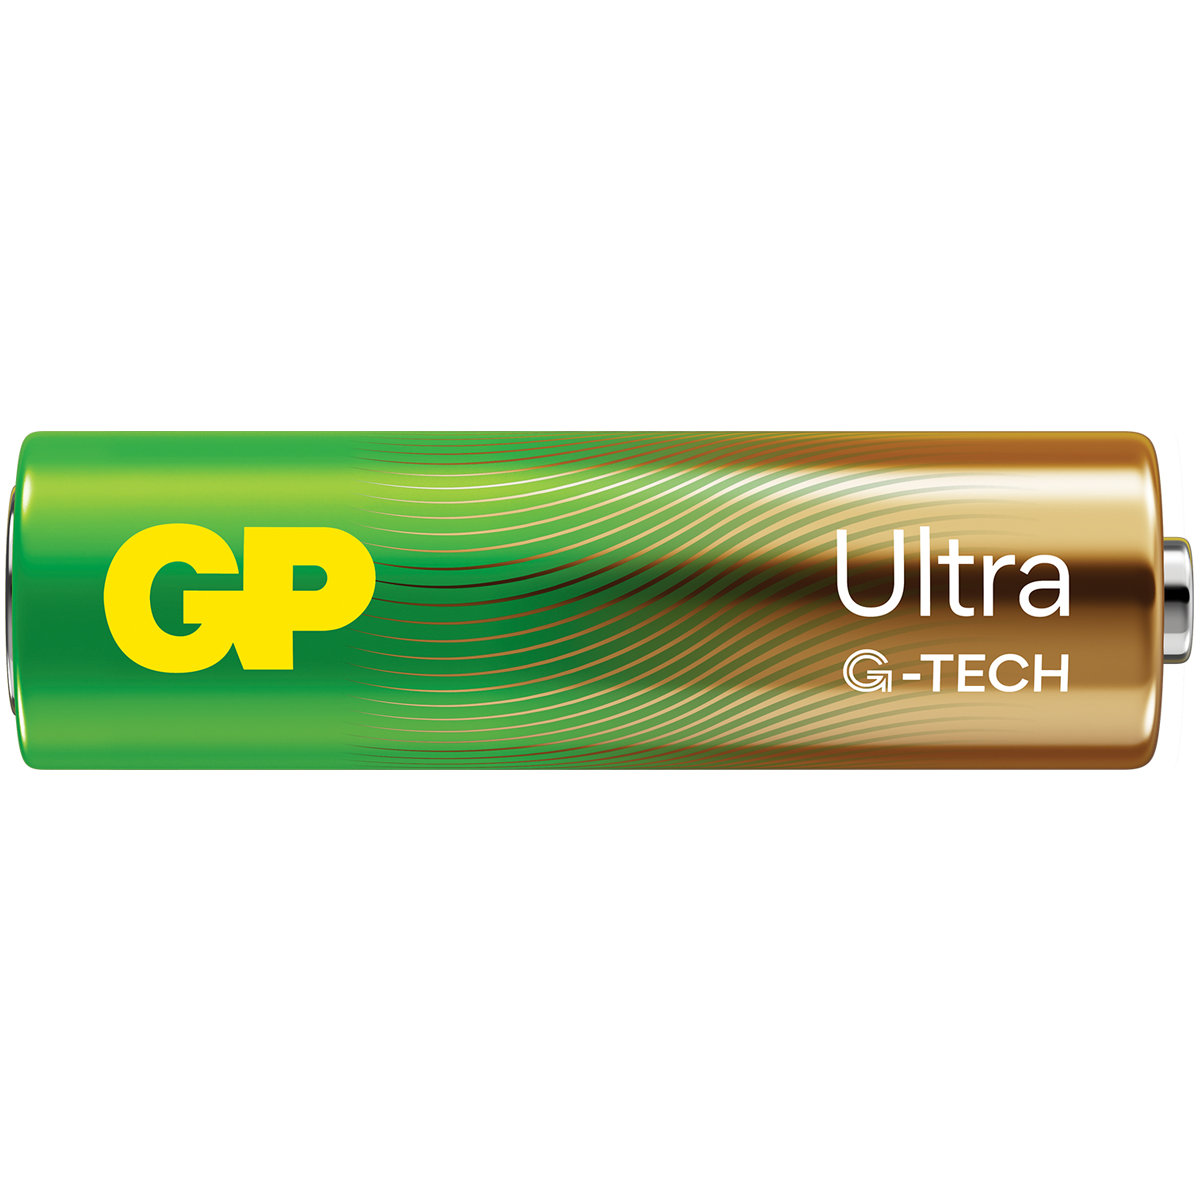 GP Ultra AA Batteries LR6 - 4 Pack